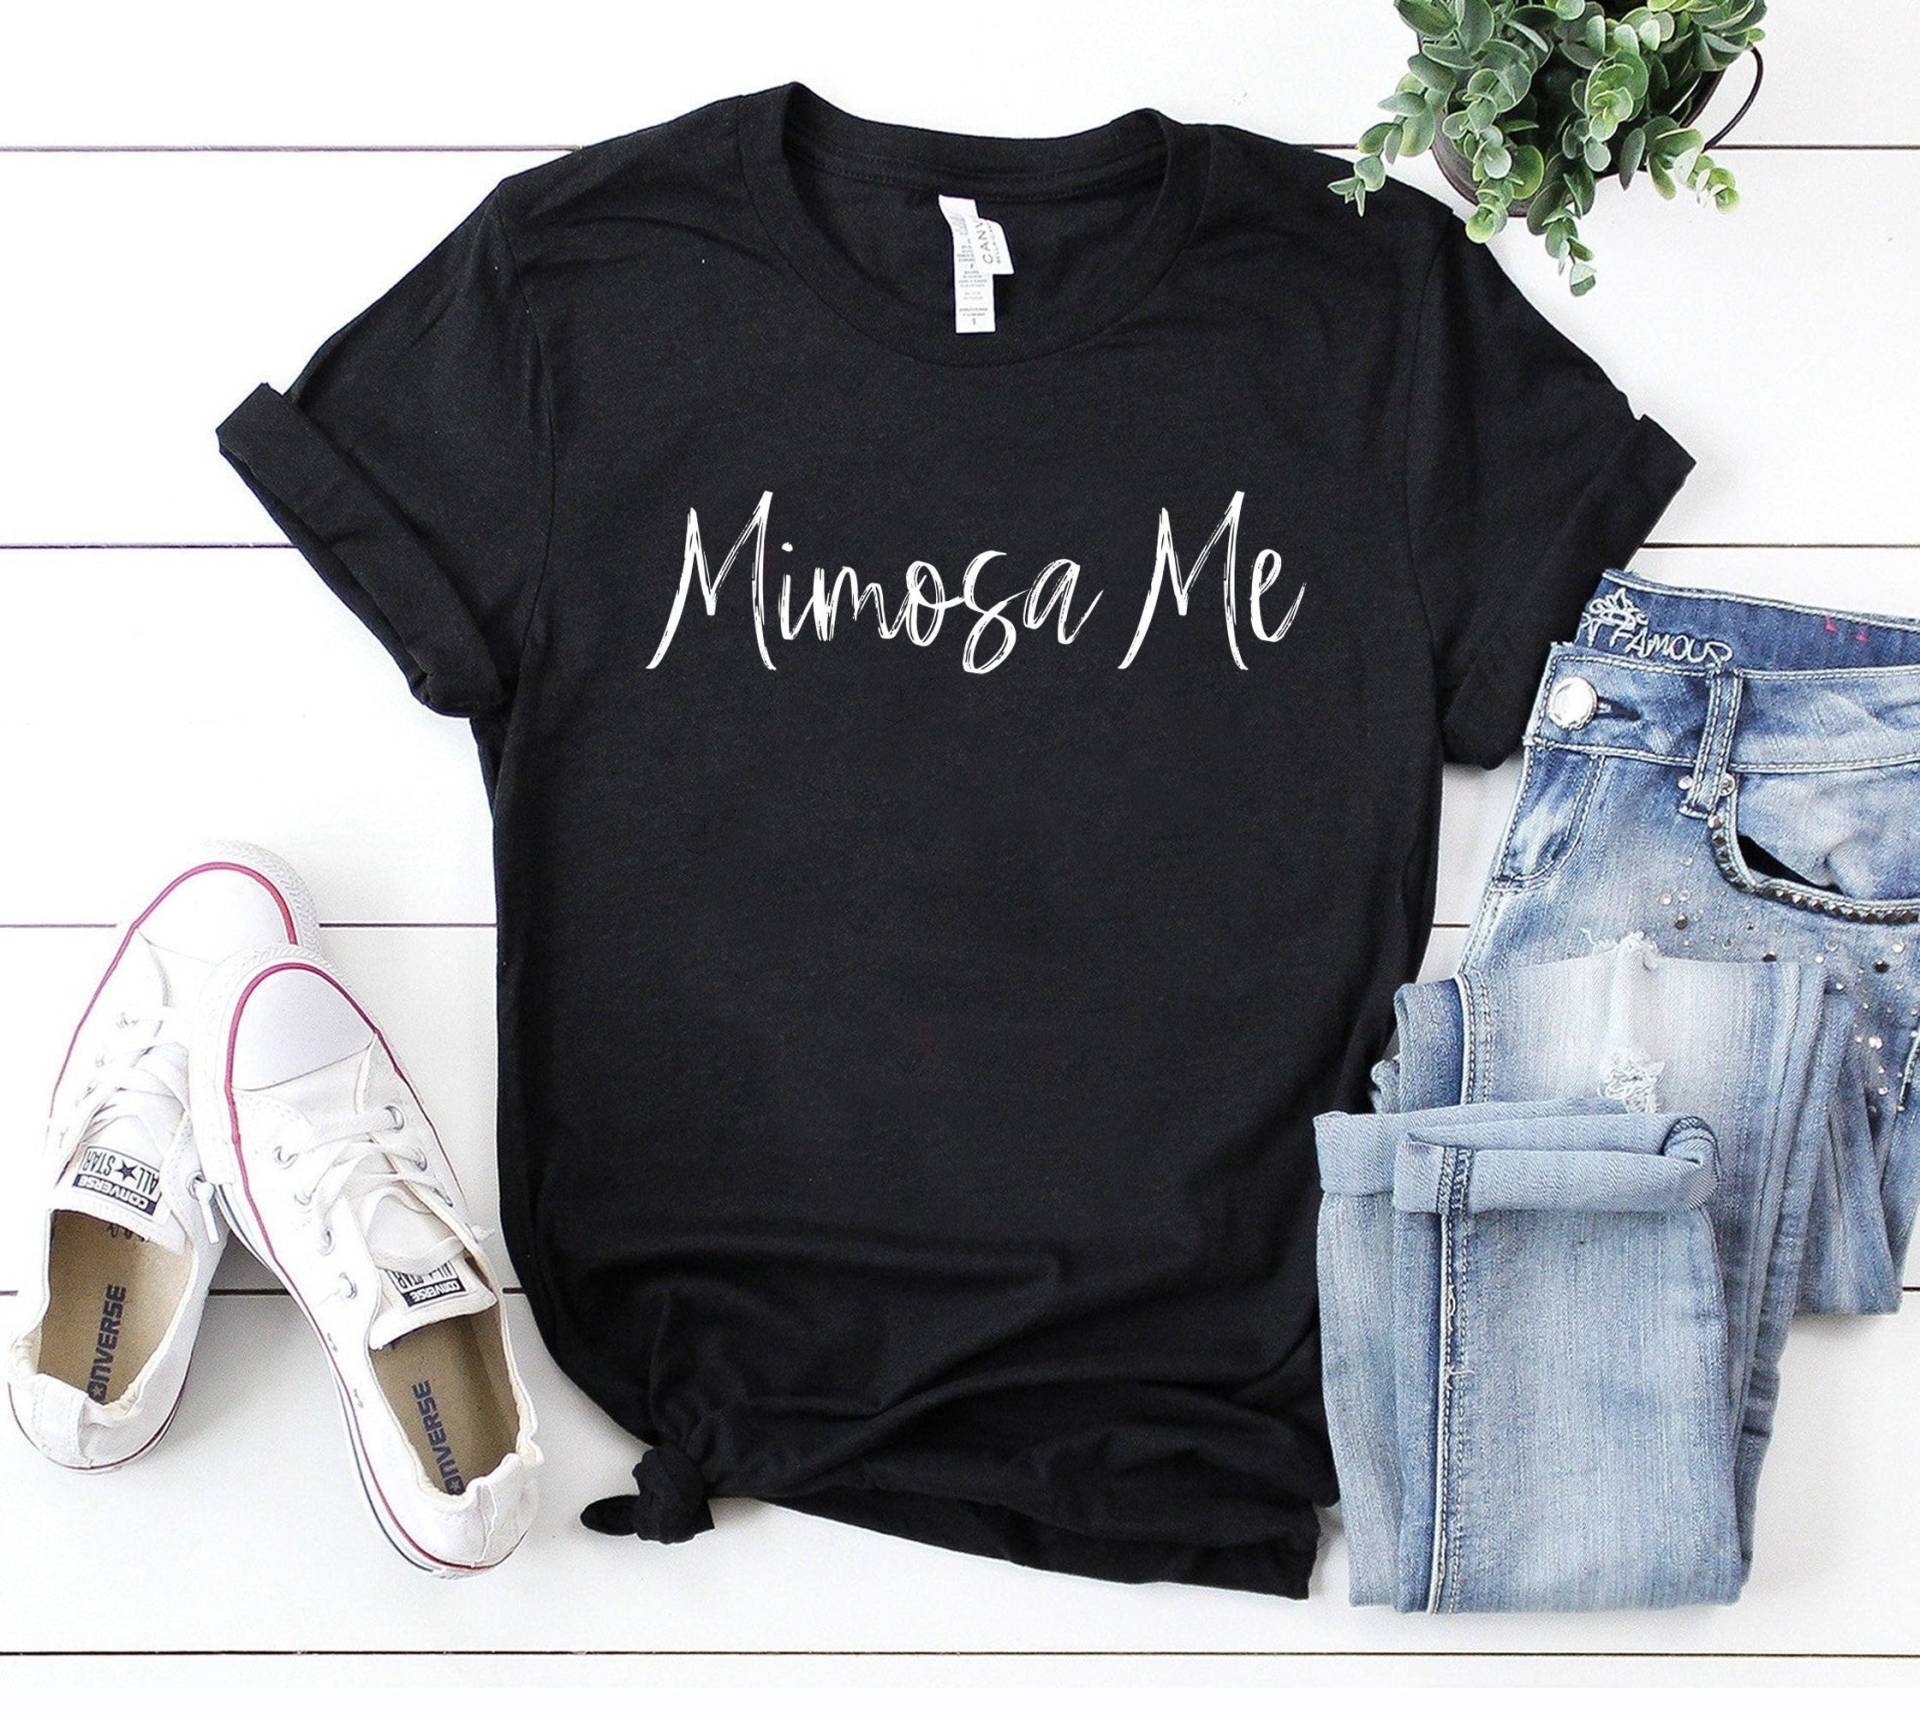 Mimosen Shirt, Shirt Lustige Passende Shirts von SimplyTraded